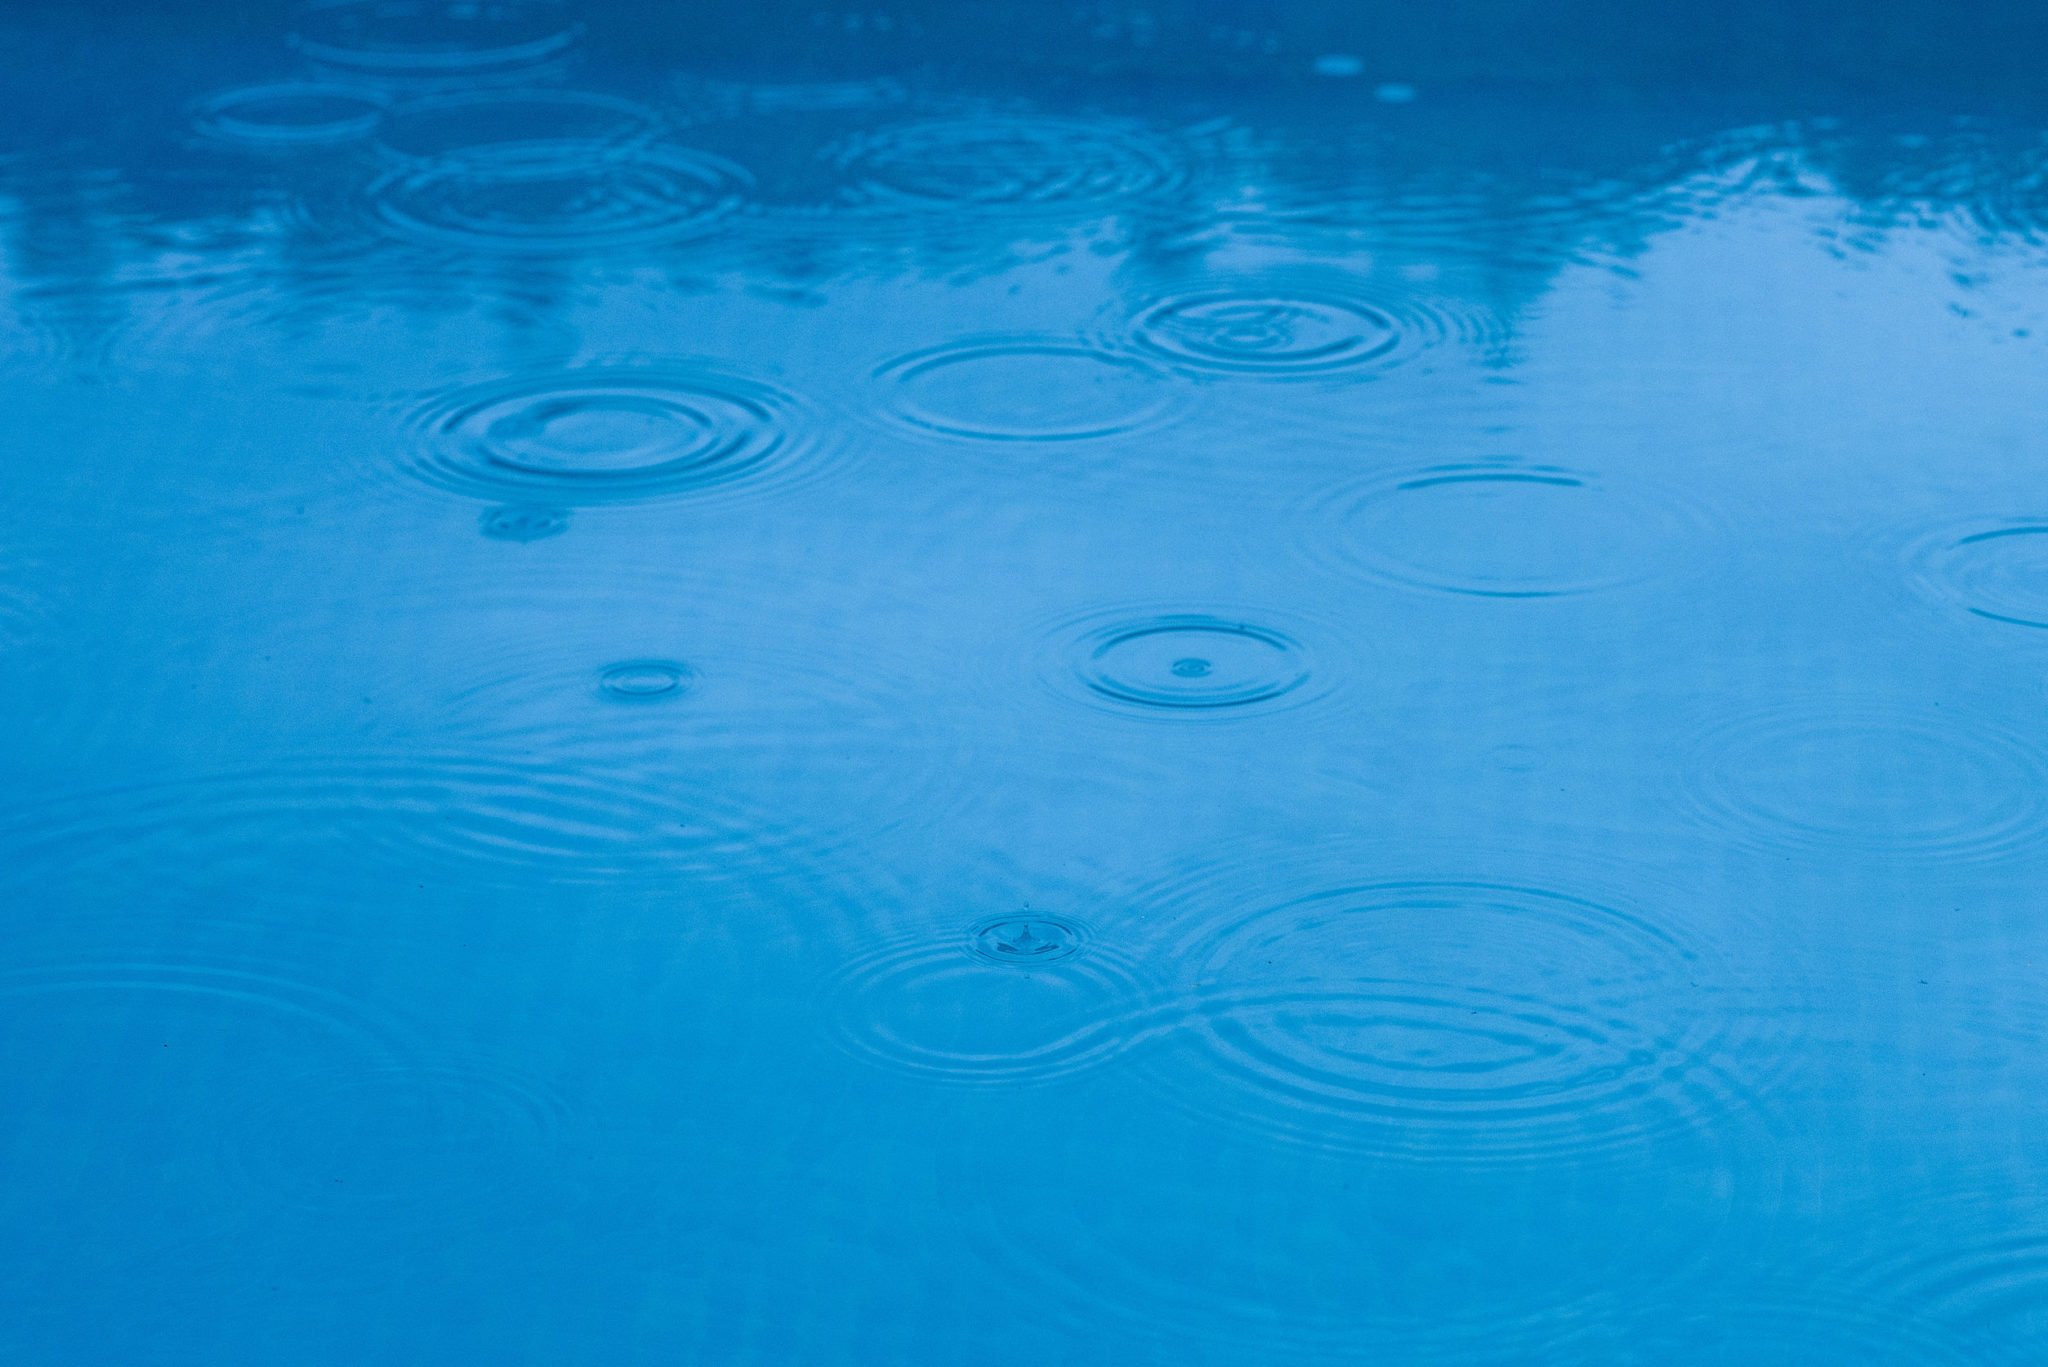 Raindrops Falling on a Pool - Rising Sun Pools & Spas